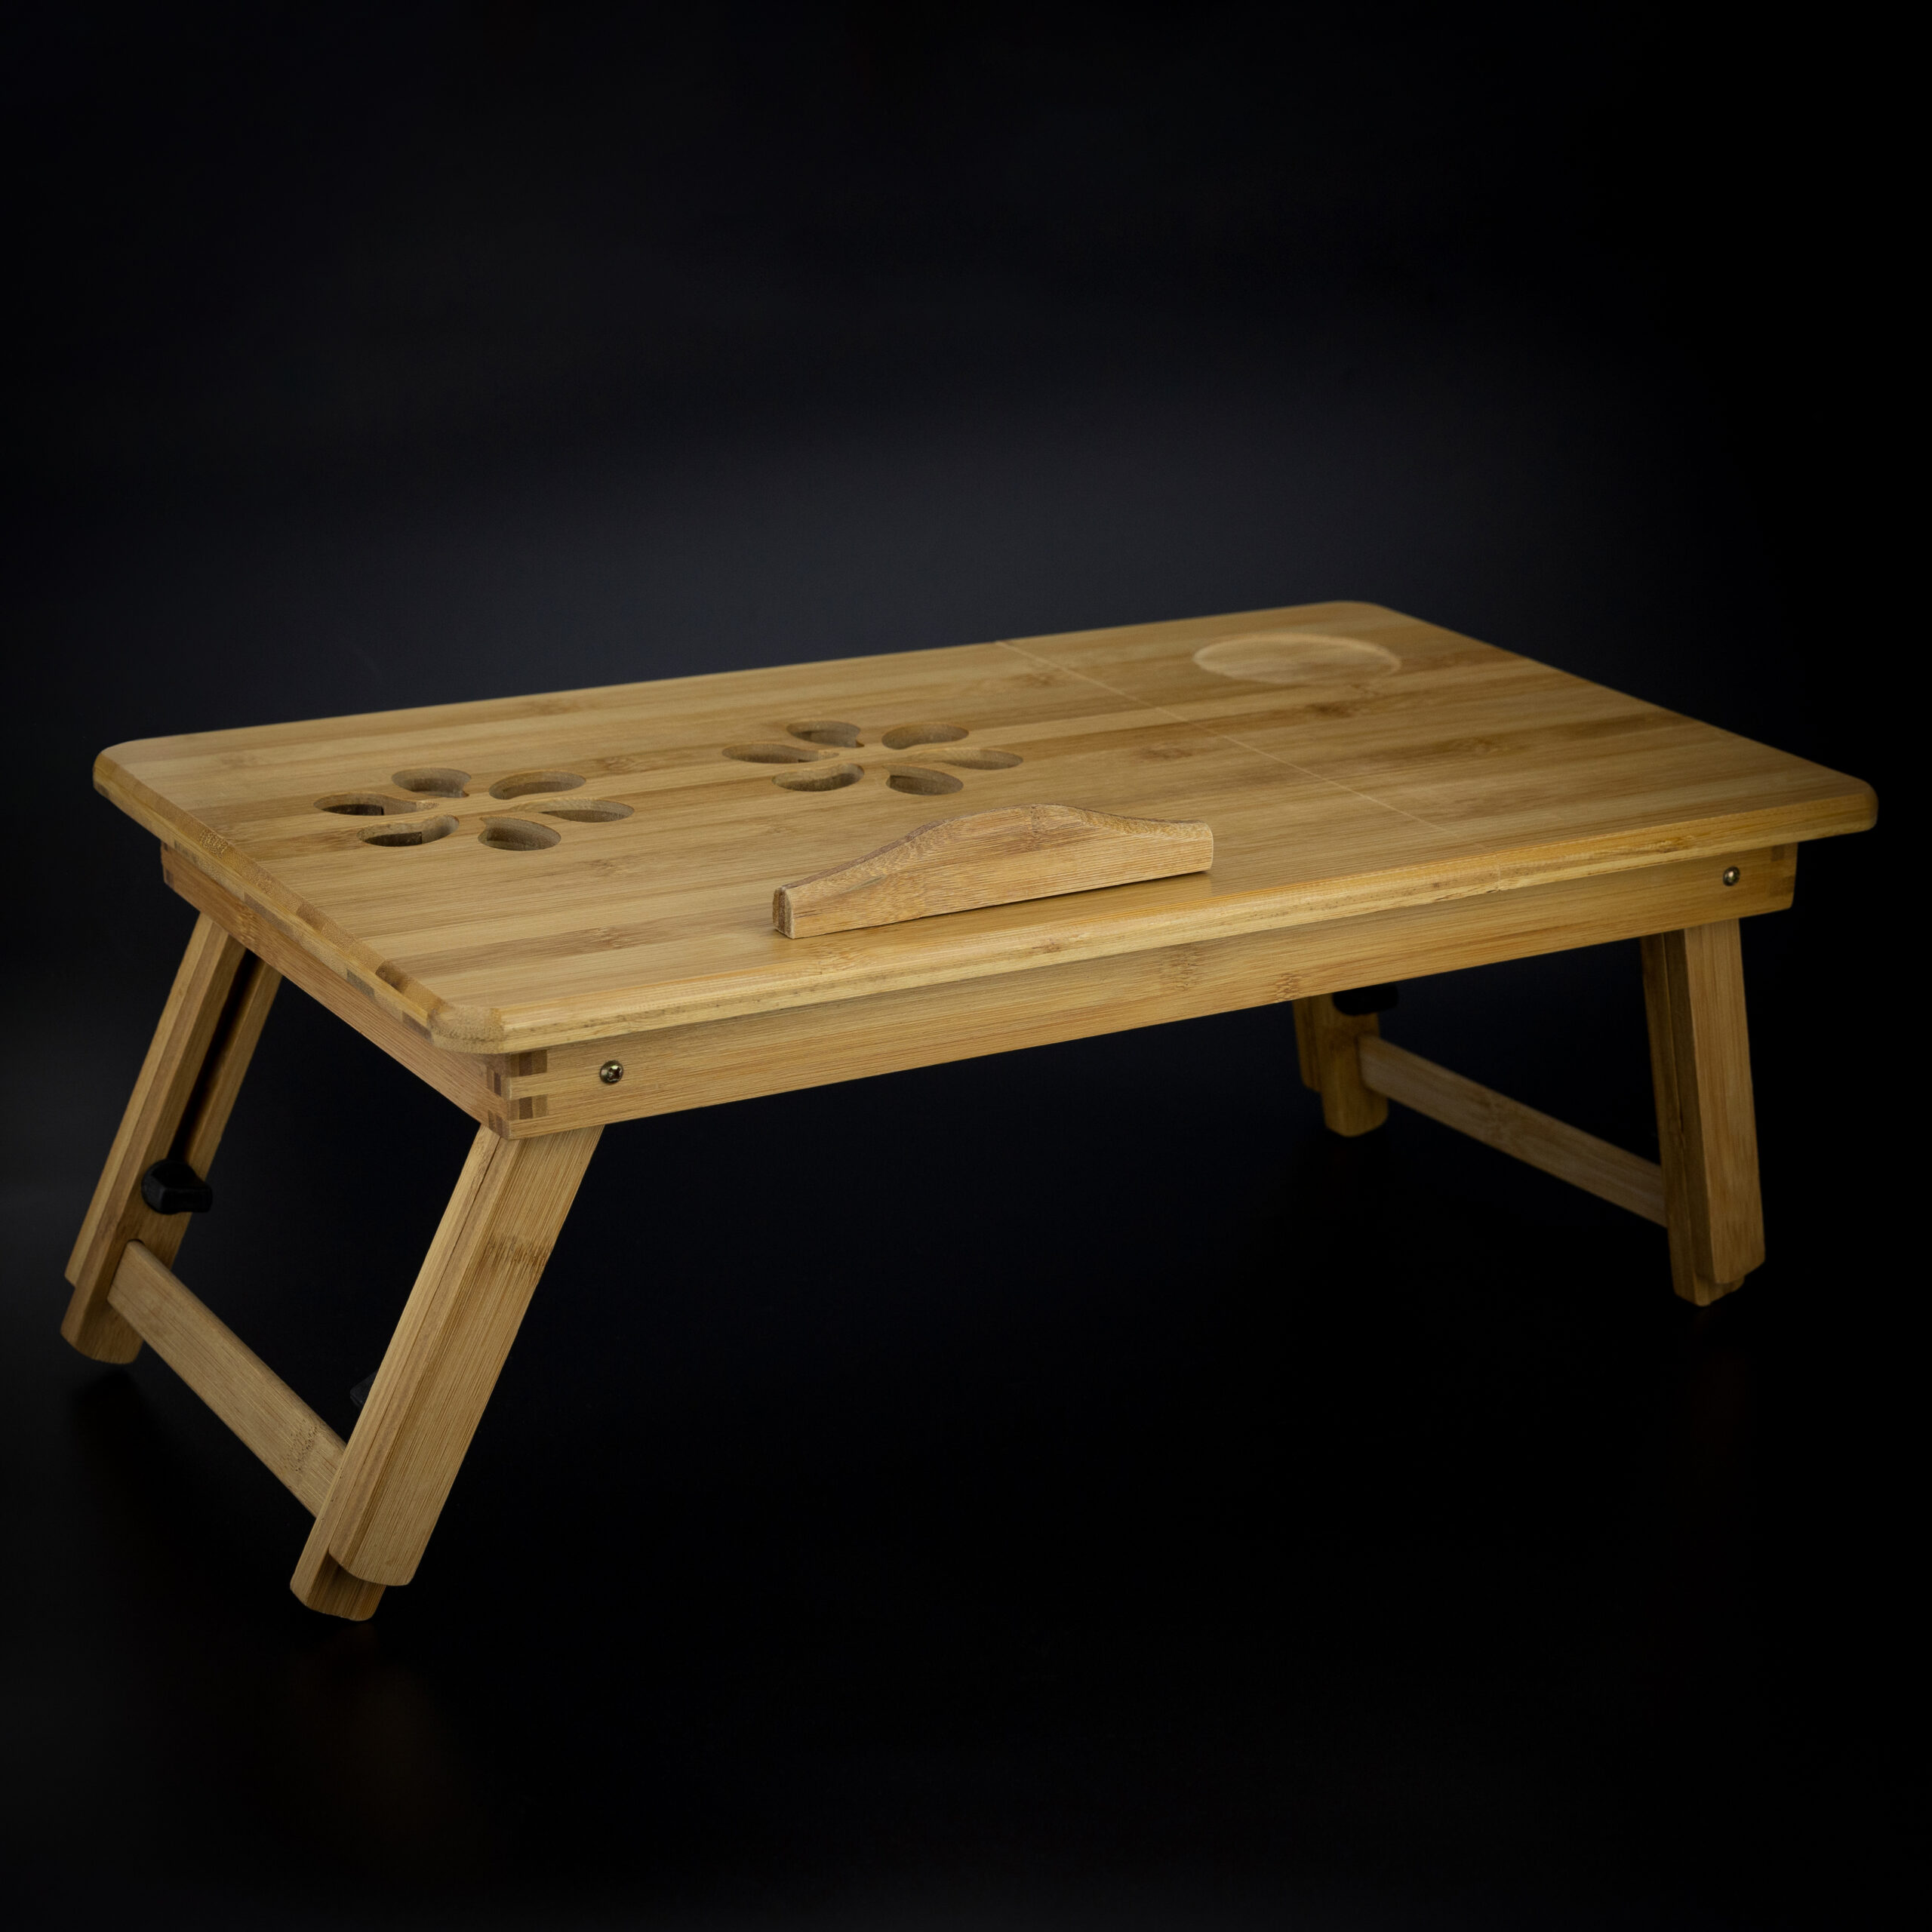 Drewniany składany stolik pod laptopa 7454_13